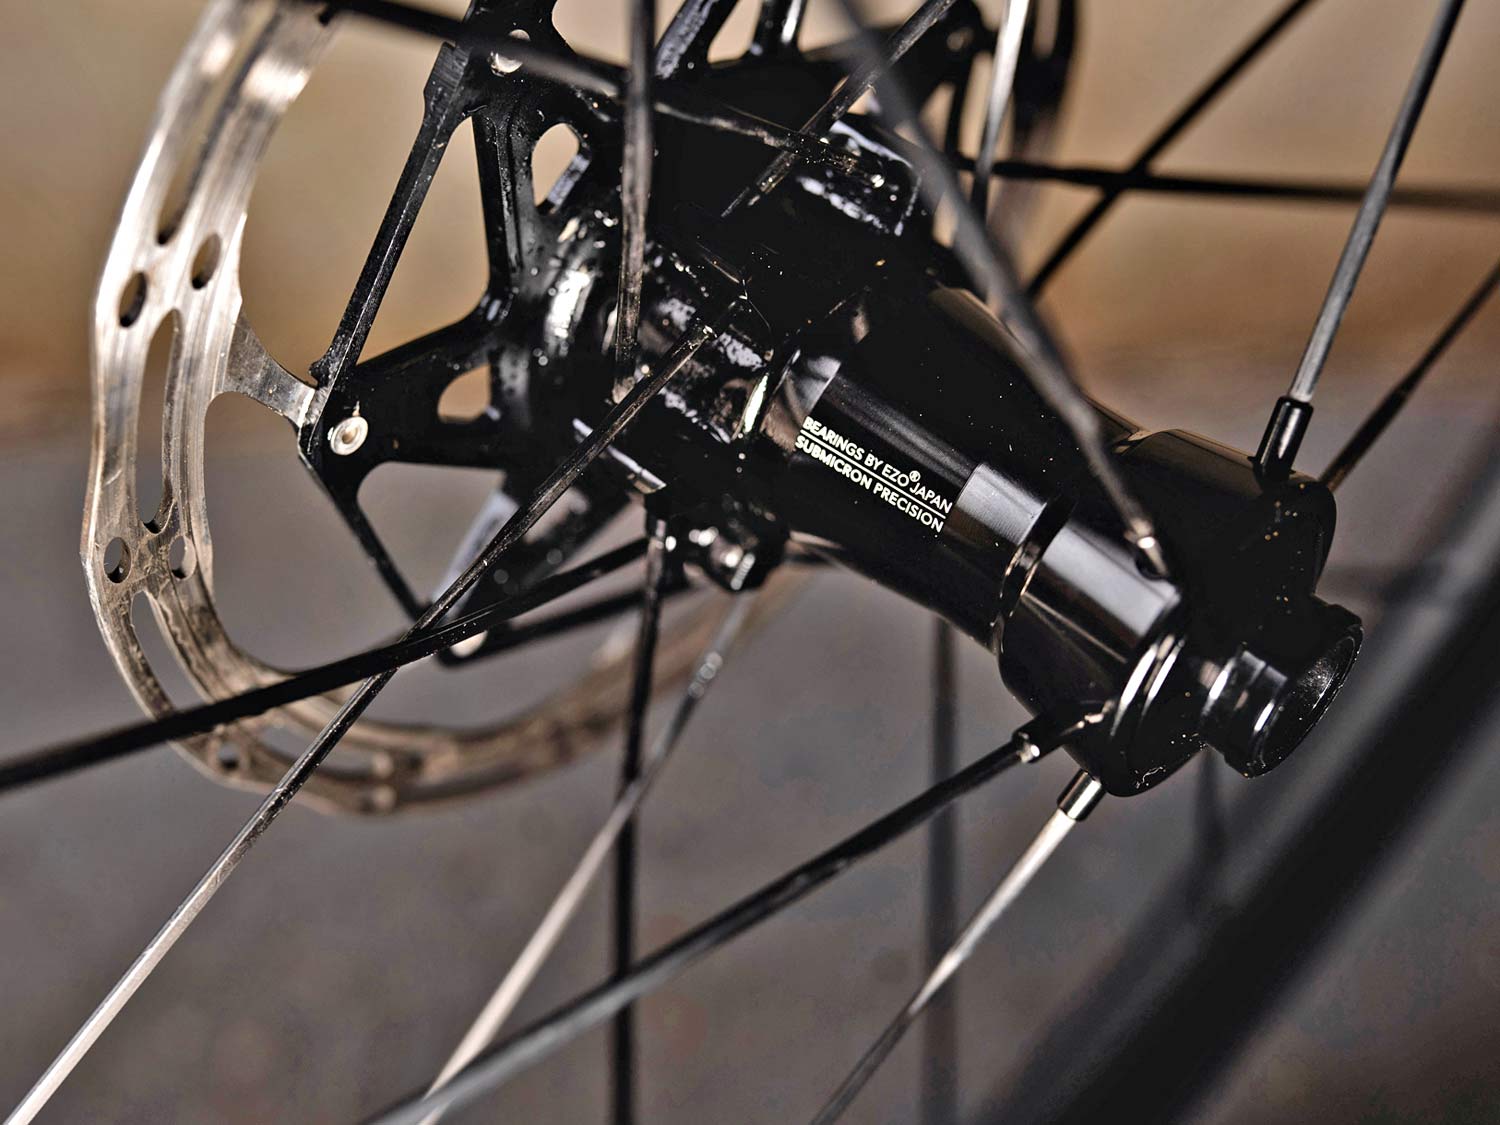 Hunt 44 & 54 UD Carbon Spoke Disc brake wheels, ultralight lightweight aero carbon-spoked, hooked tubeless carbon road bike wheelset